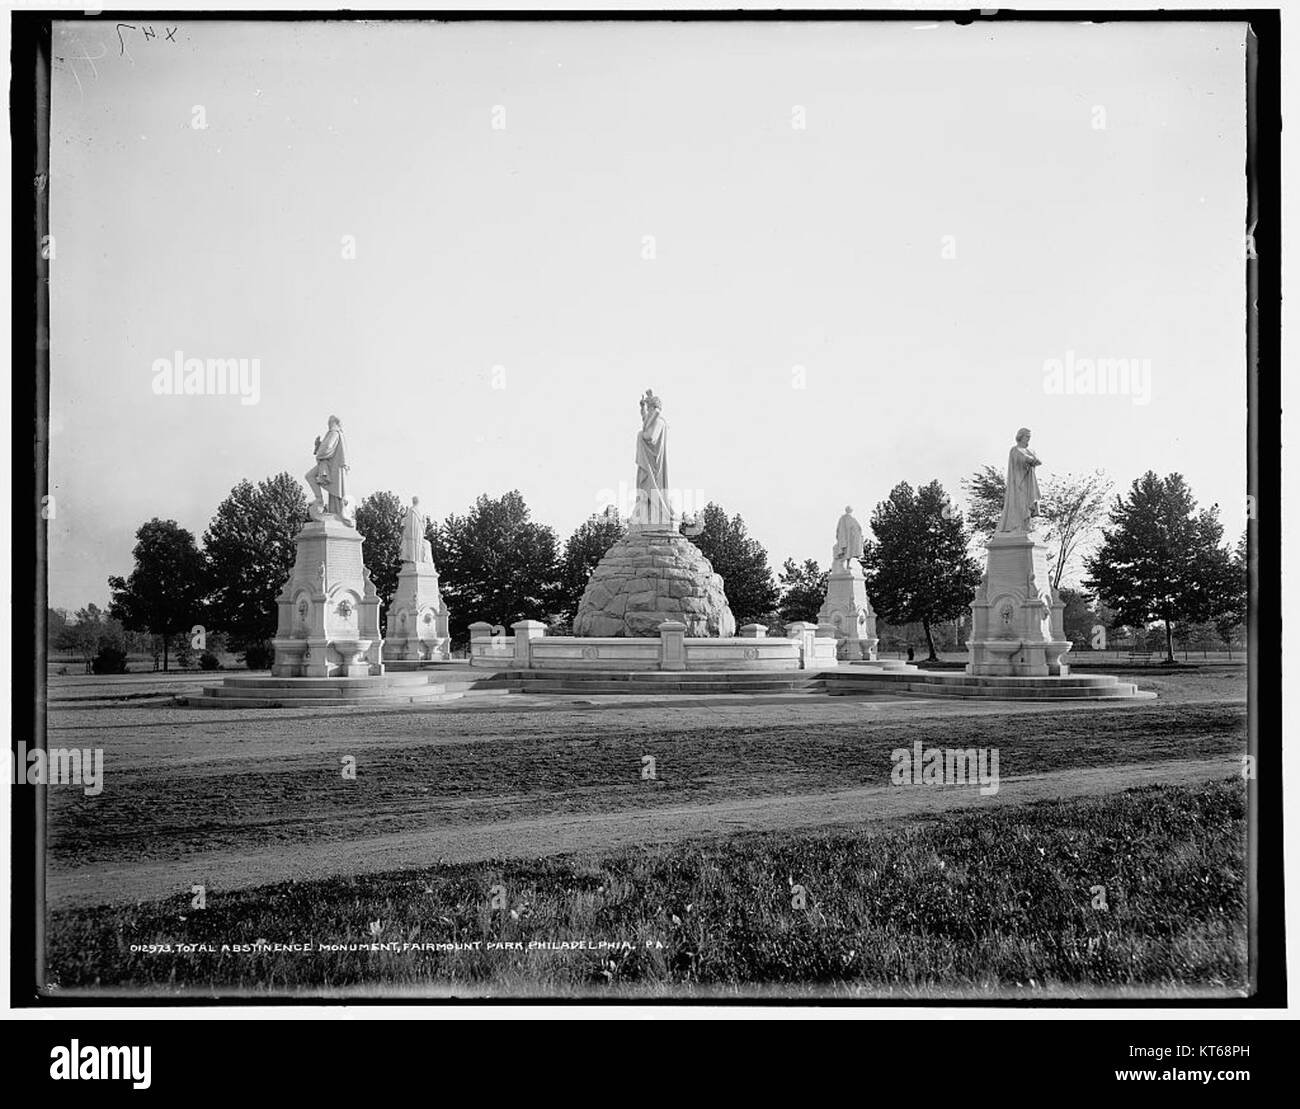 Astinenza totale monumento, Fairmount Park, Philadelphia, PA Detroit Pub. Co. c.1900 Foto Stock